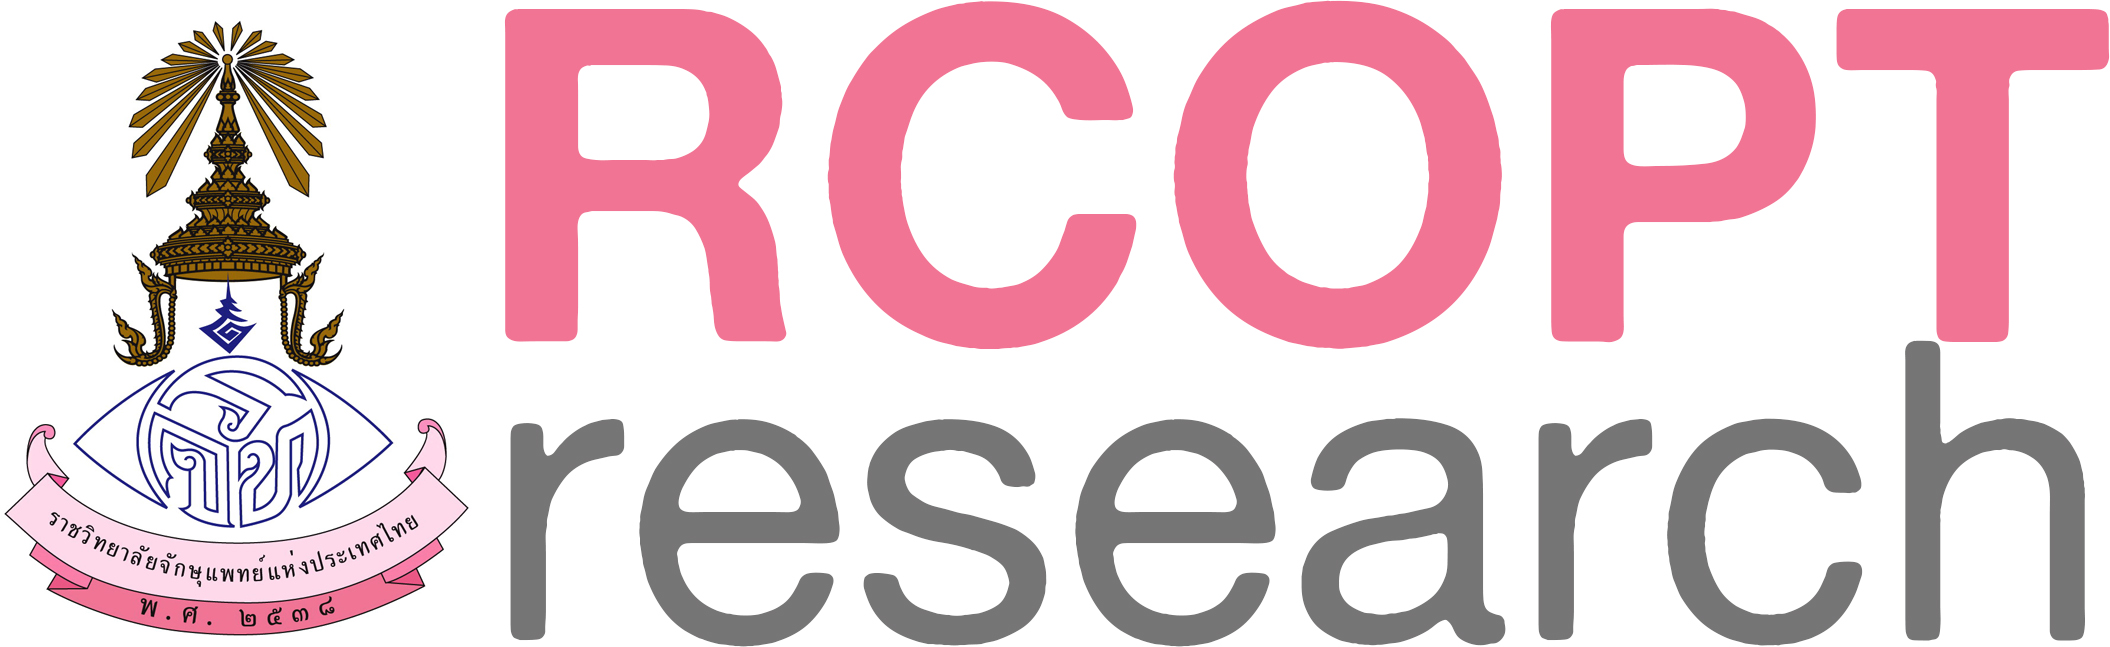 2071RCOPT research logo1.jpg